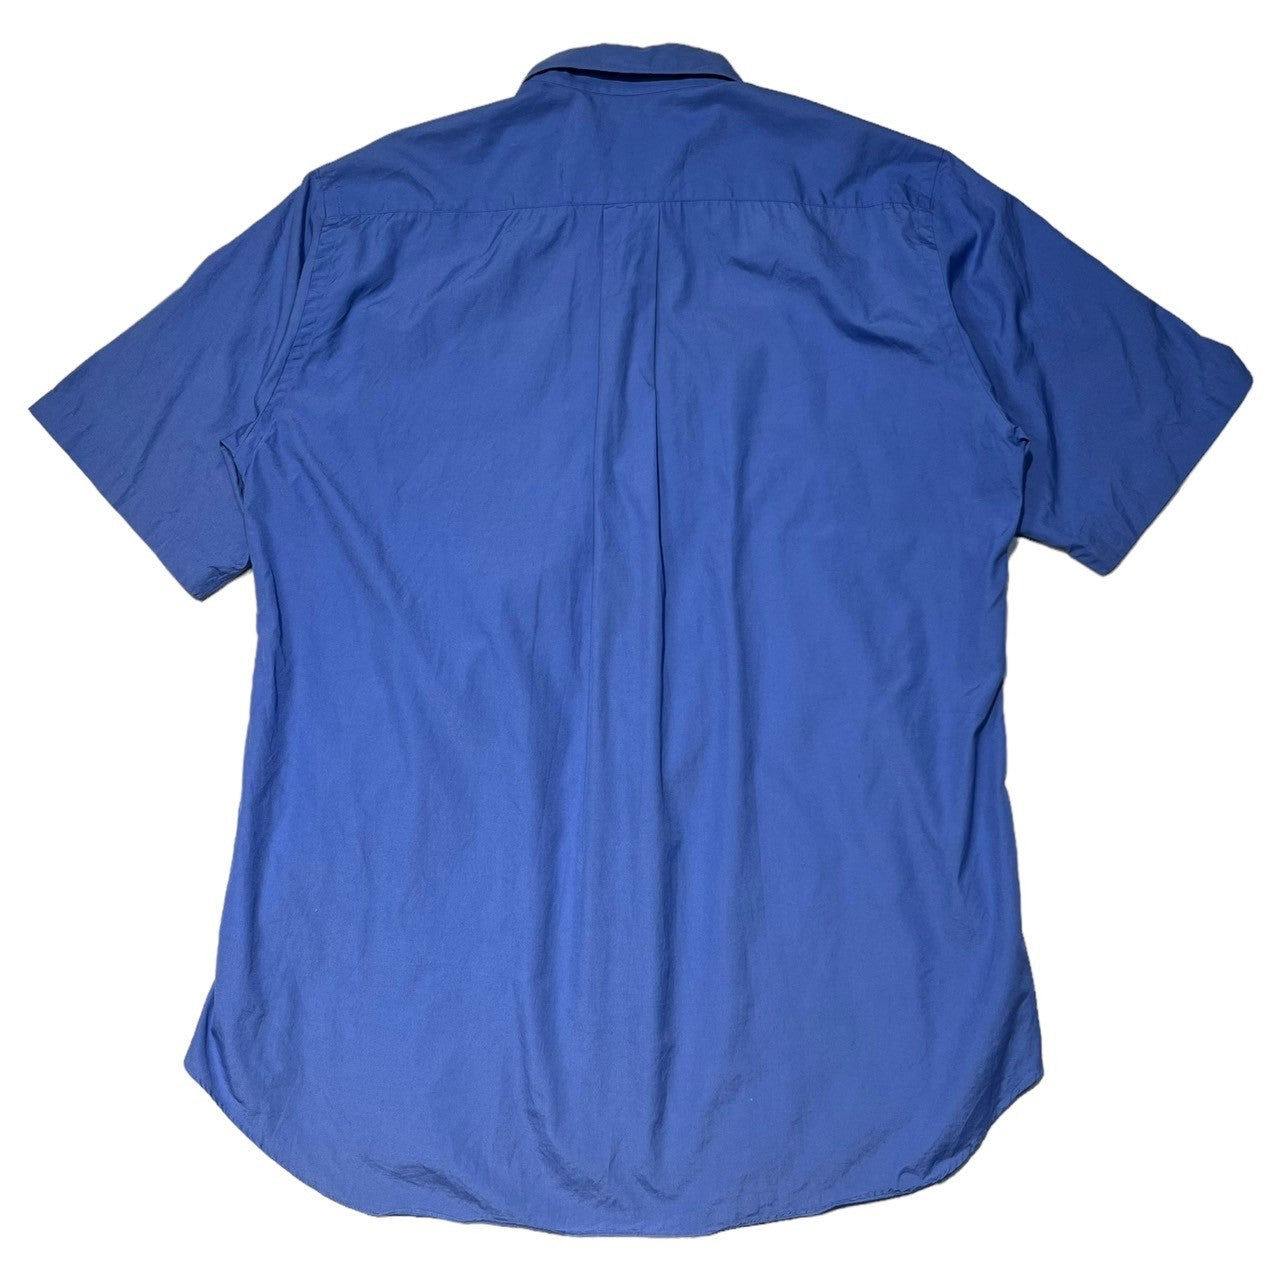 COMME des GARCONS HOMME HOMME(コムデギャルソンオムオム) 00SS  Old vertical line cotton short sleeve shirt オールド縦ラインコットン半袖シャツ M ブルー 00's AD1999 IB-100290